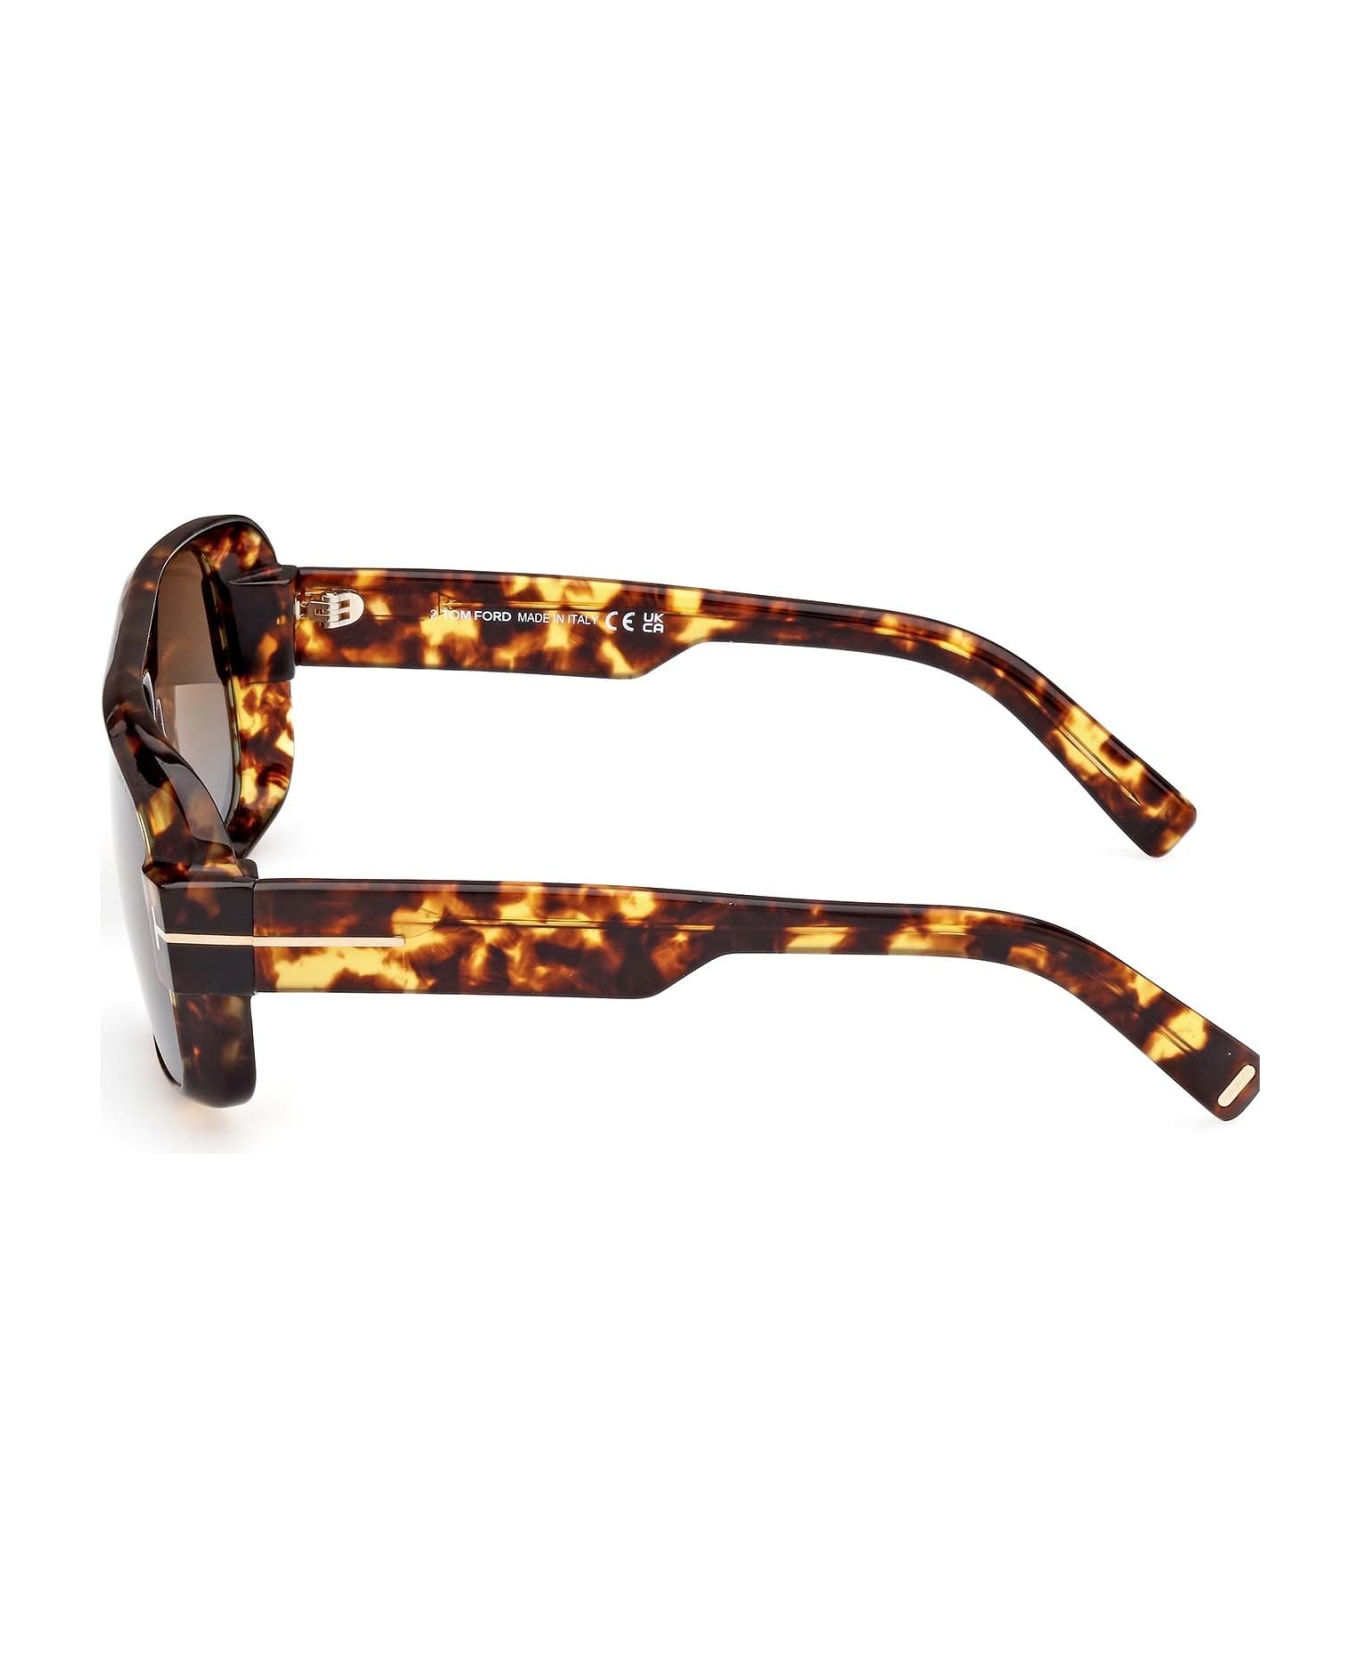 Tom Ford Eyewear Sunglasses - Multicolor/Marrone